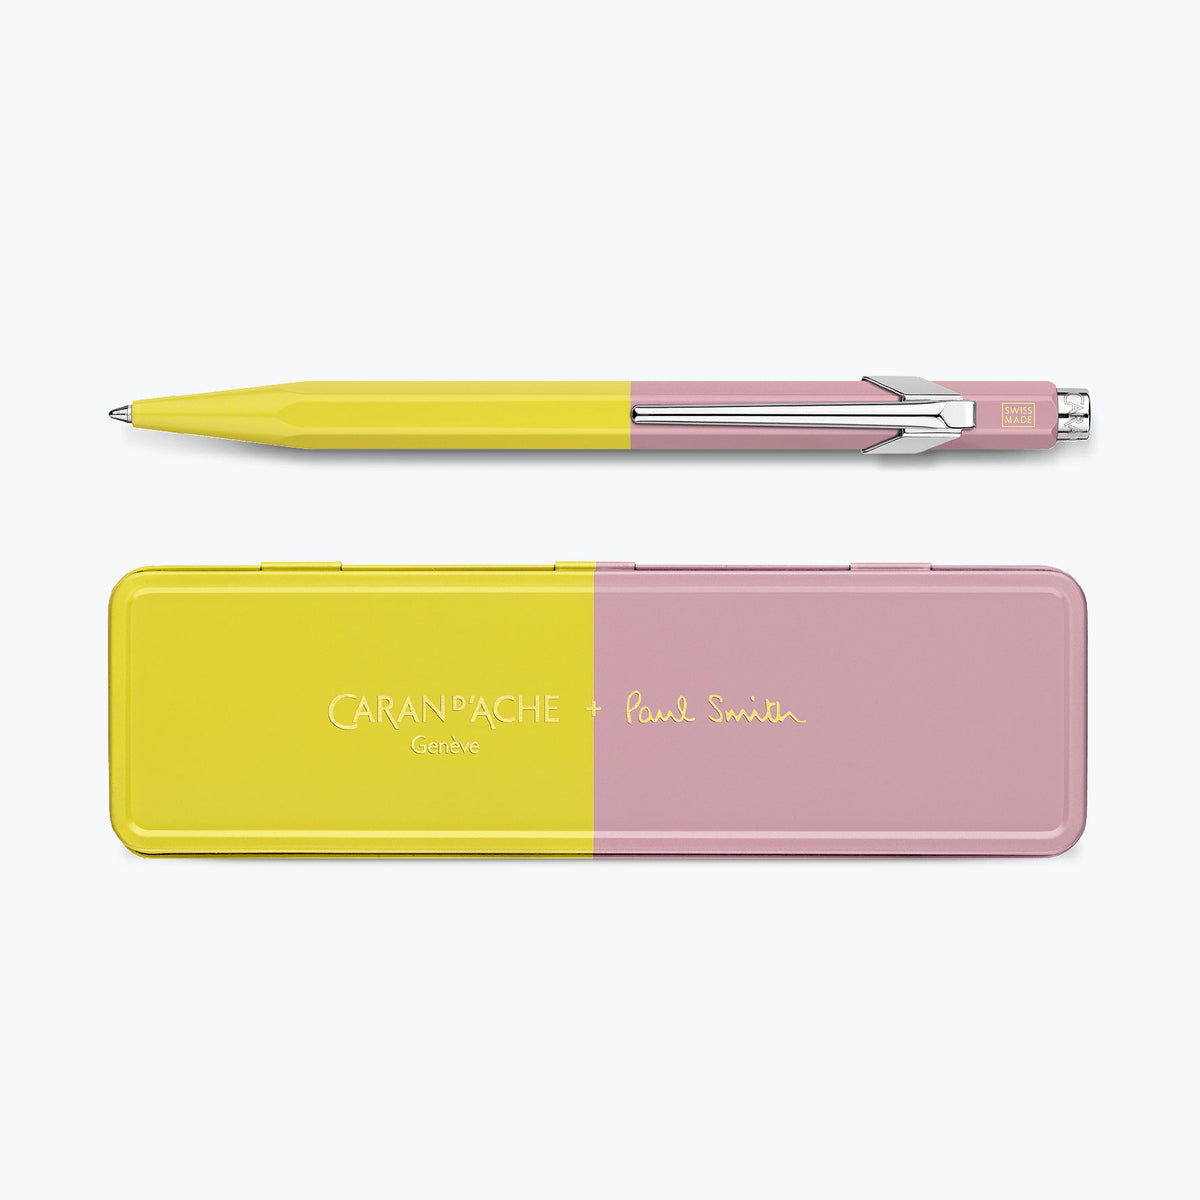 Caran d'Ache - Ballpoint Pen - 849 Paul Smith 4 - Chartreuse Yellow & Rose Pink